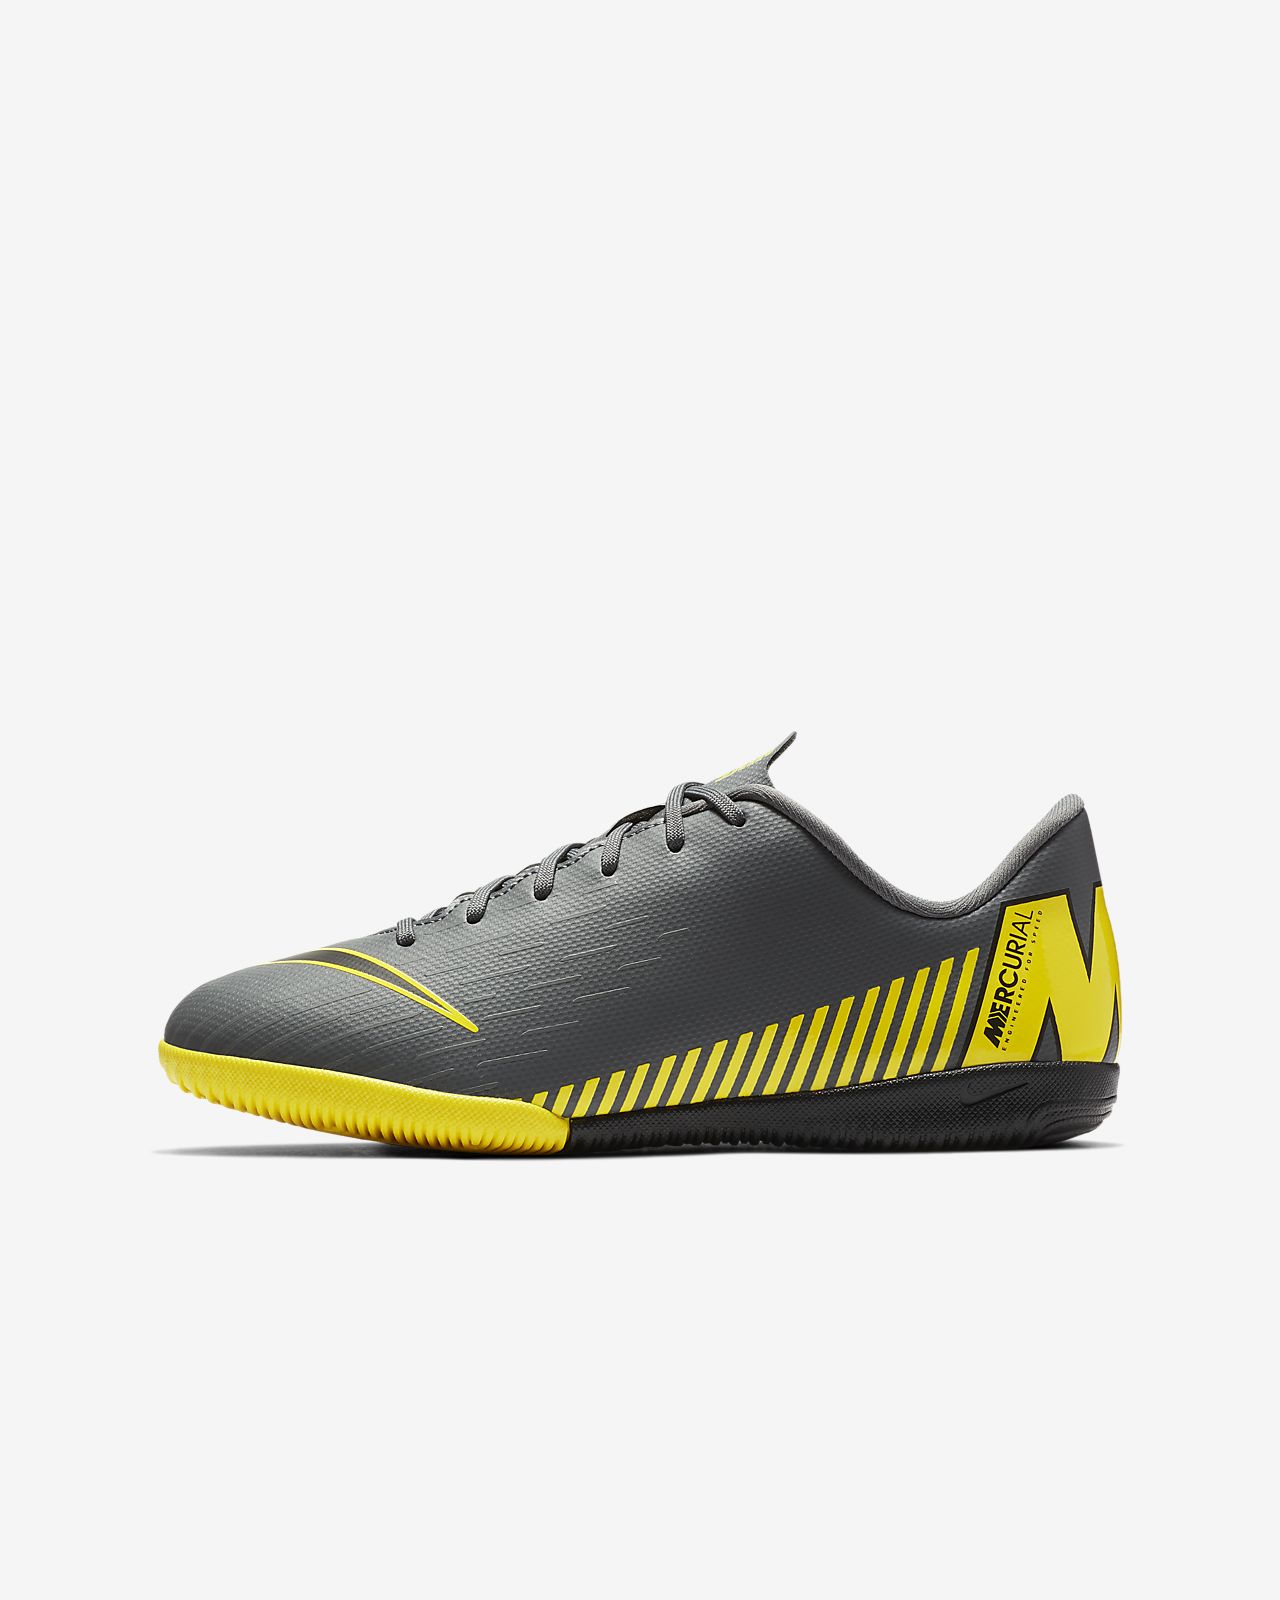 Nike Mercurial Vapor 13 Elite FG Boots Under The Radar Black